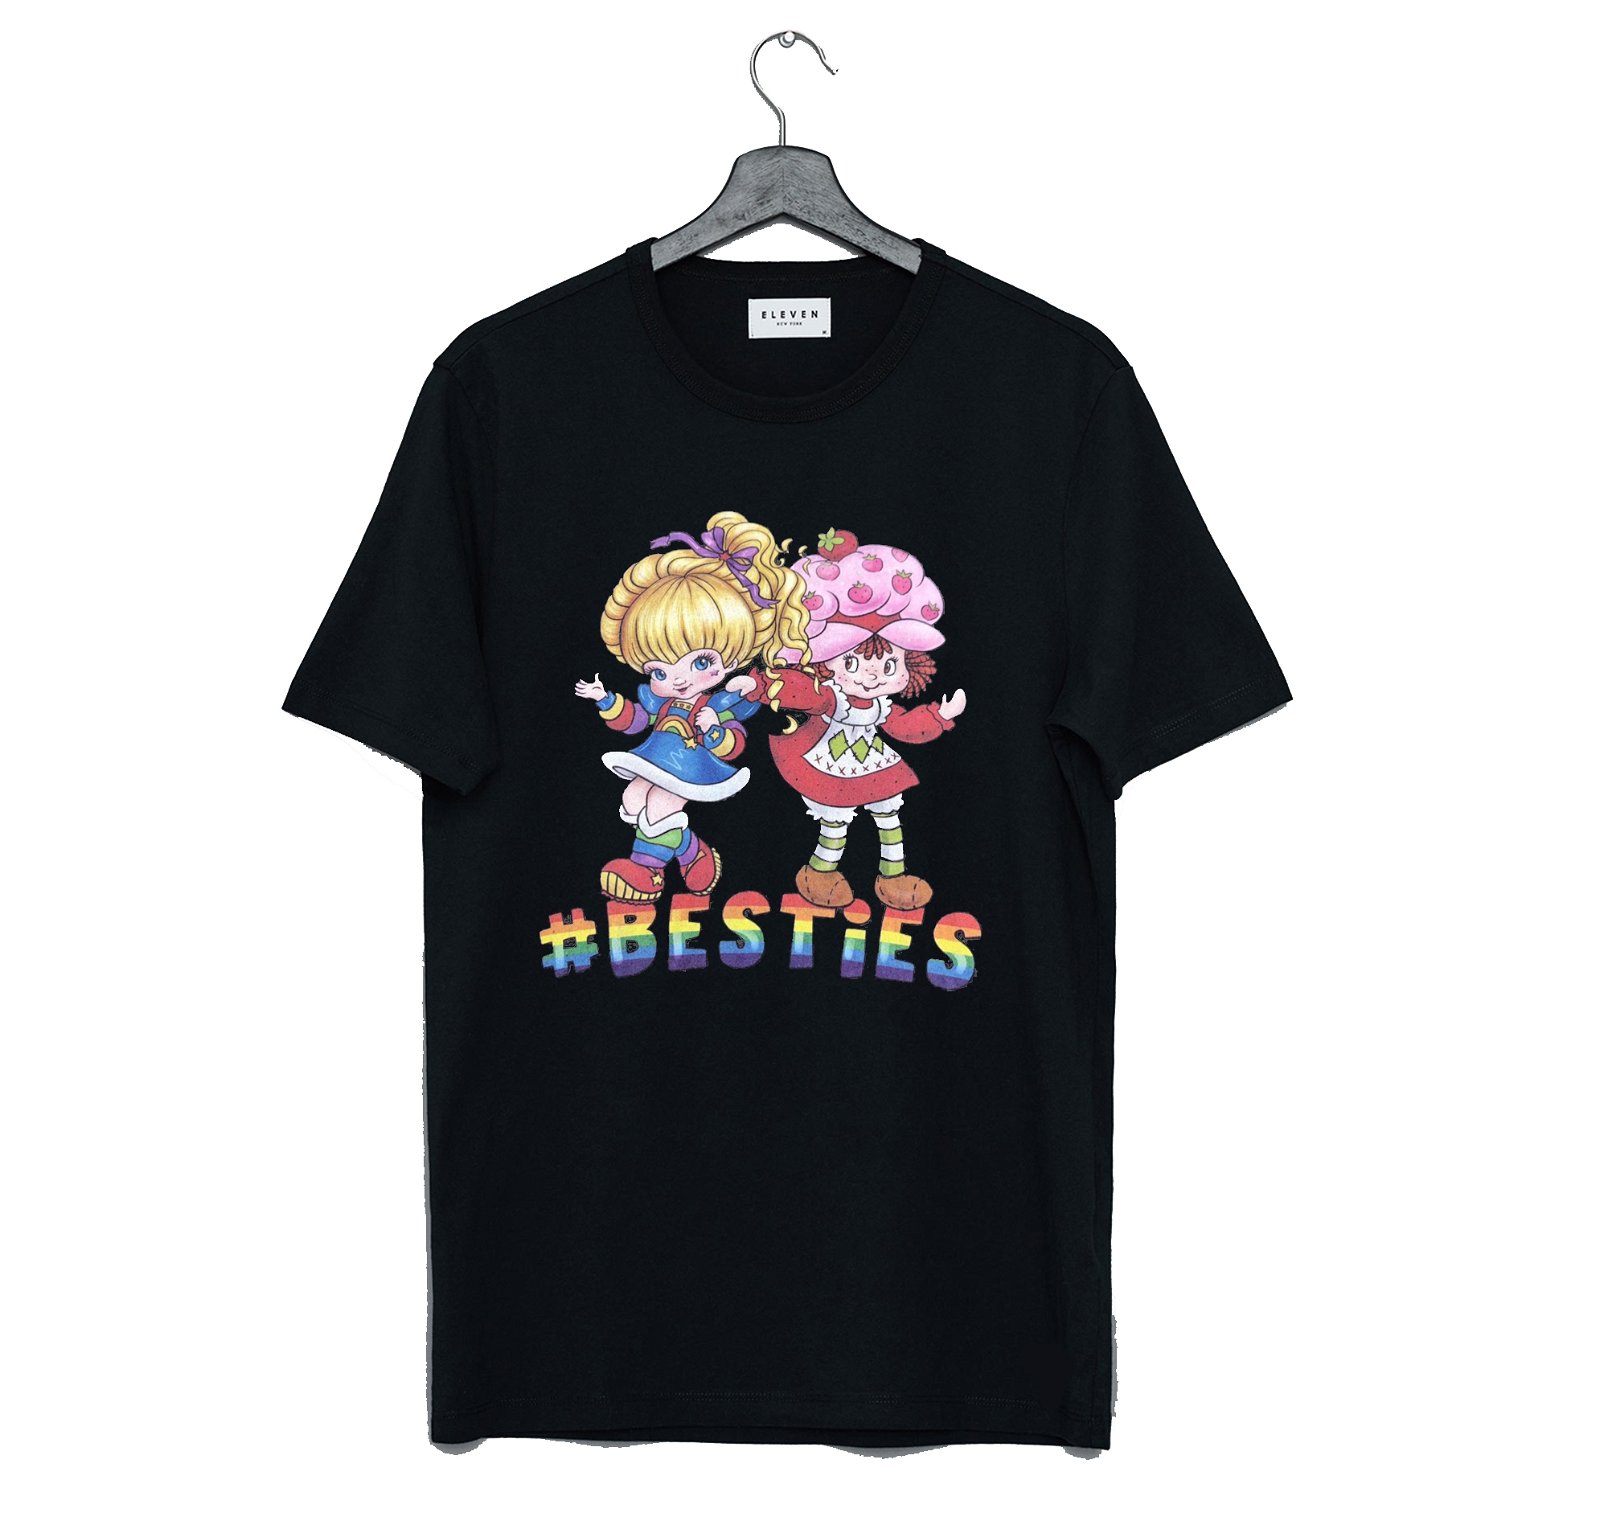 NEW Besties Rainbow Brite Women Black Tshirt Size S-XL 